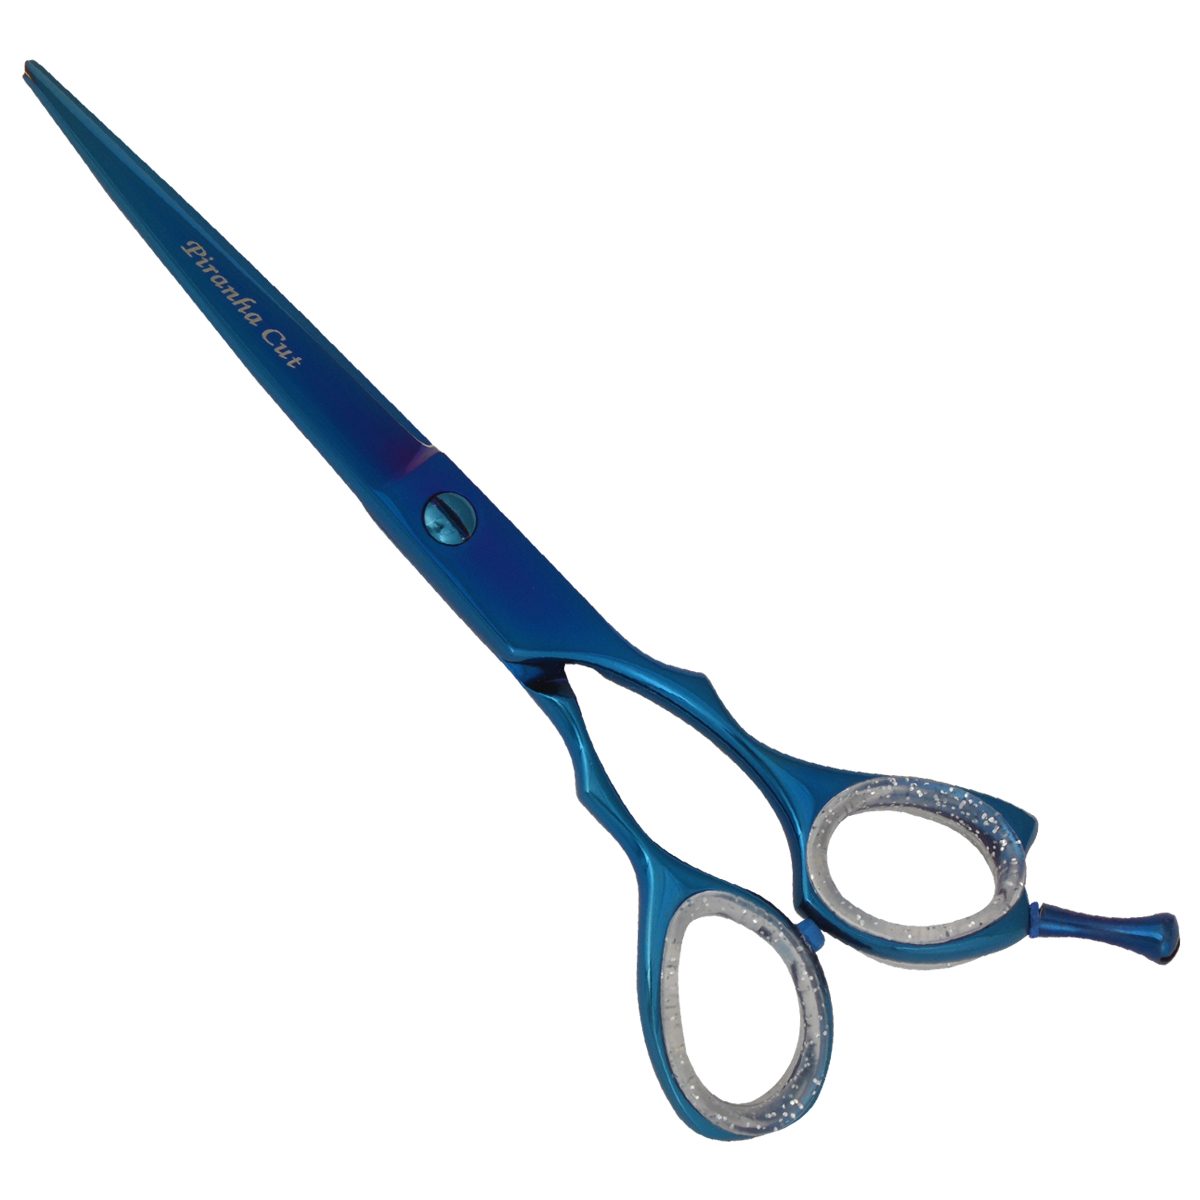 Hairdressing Scissors with Ergo Handle